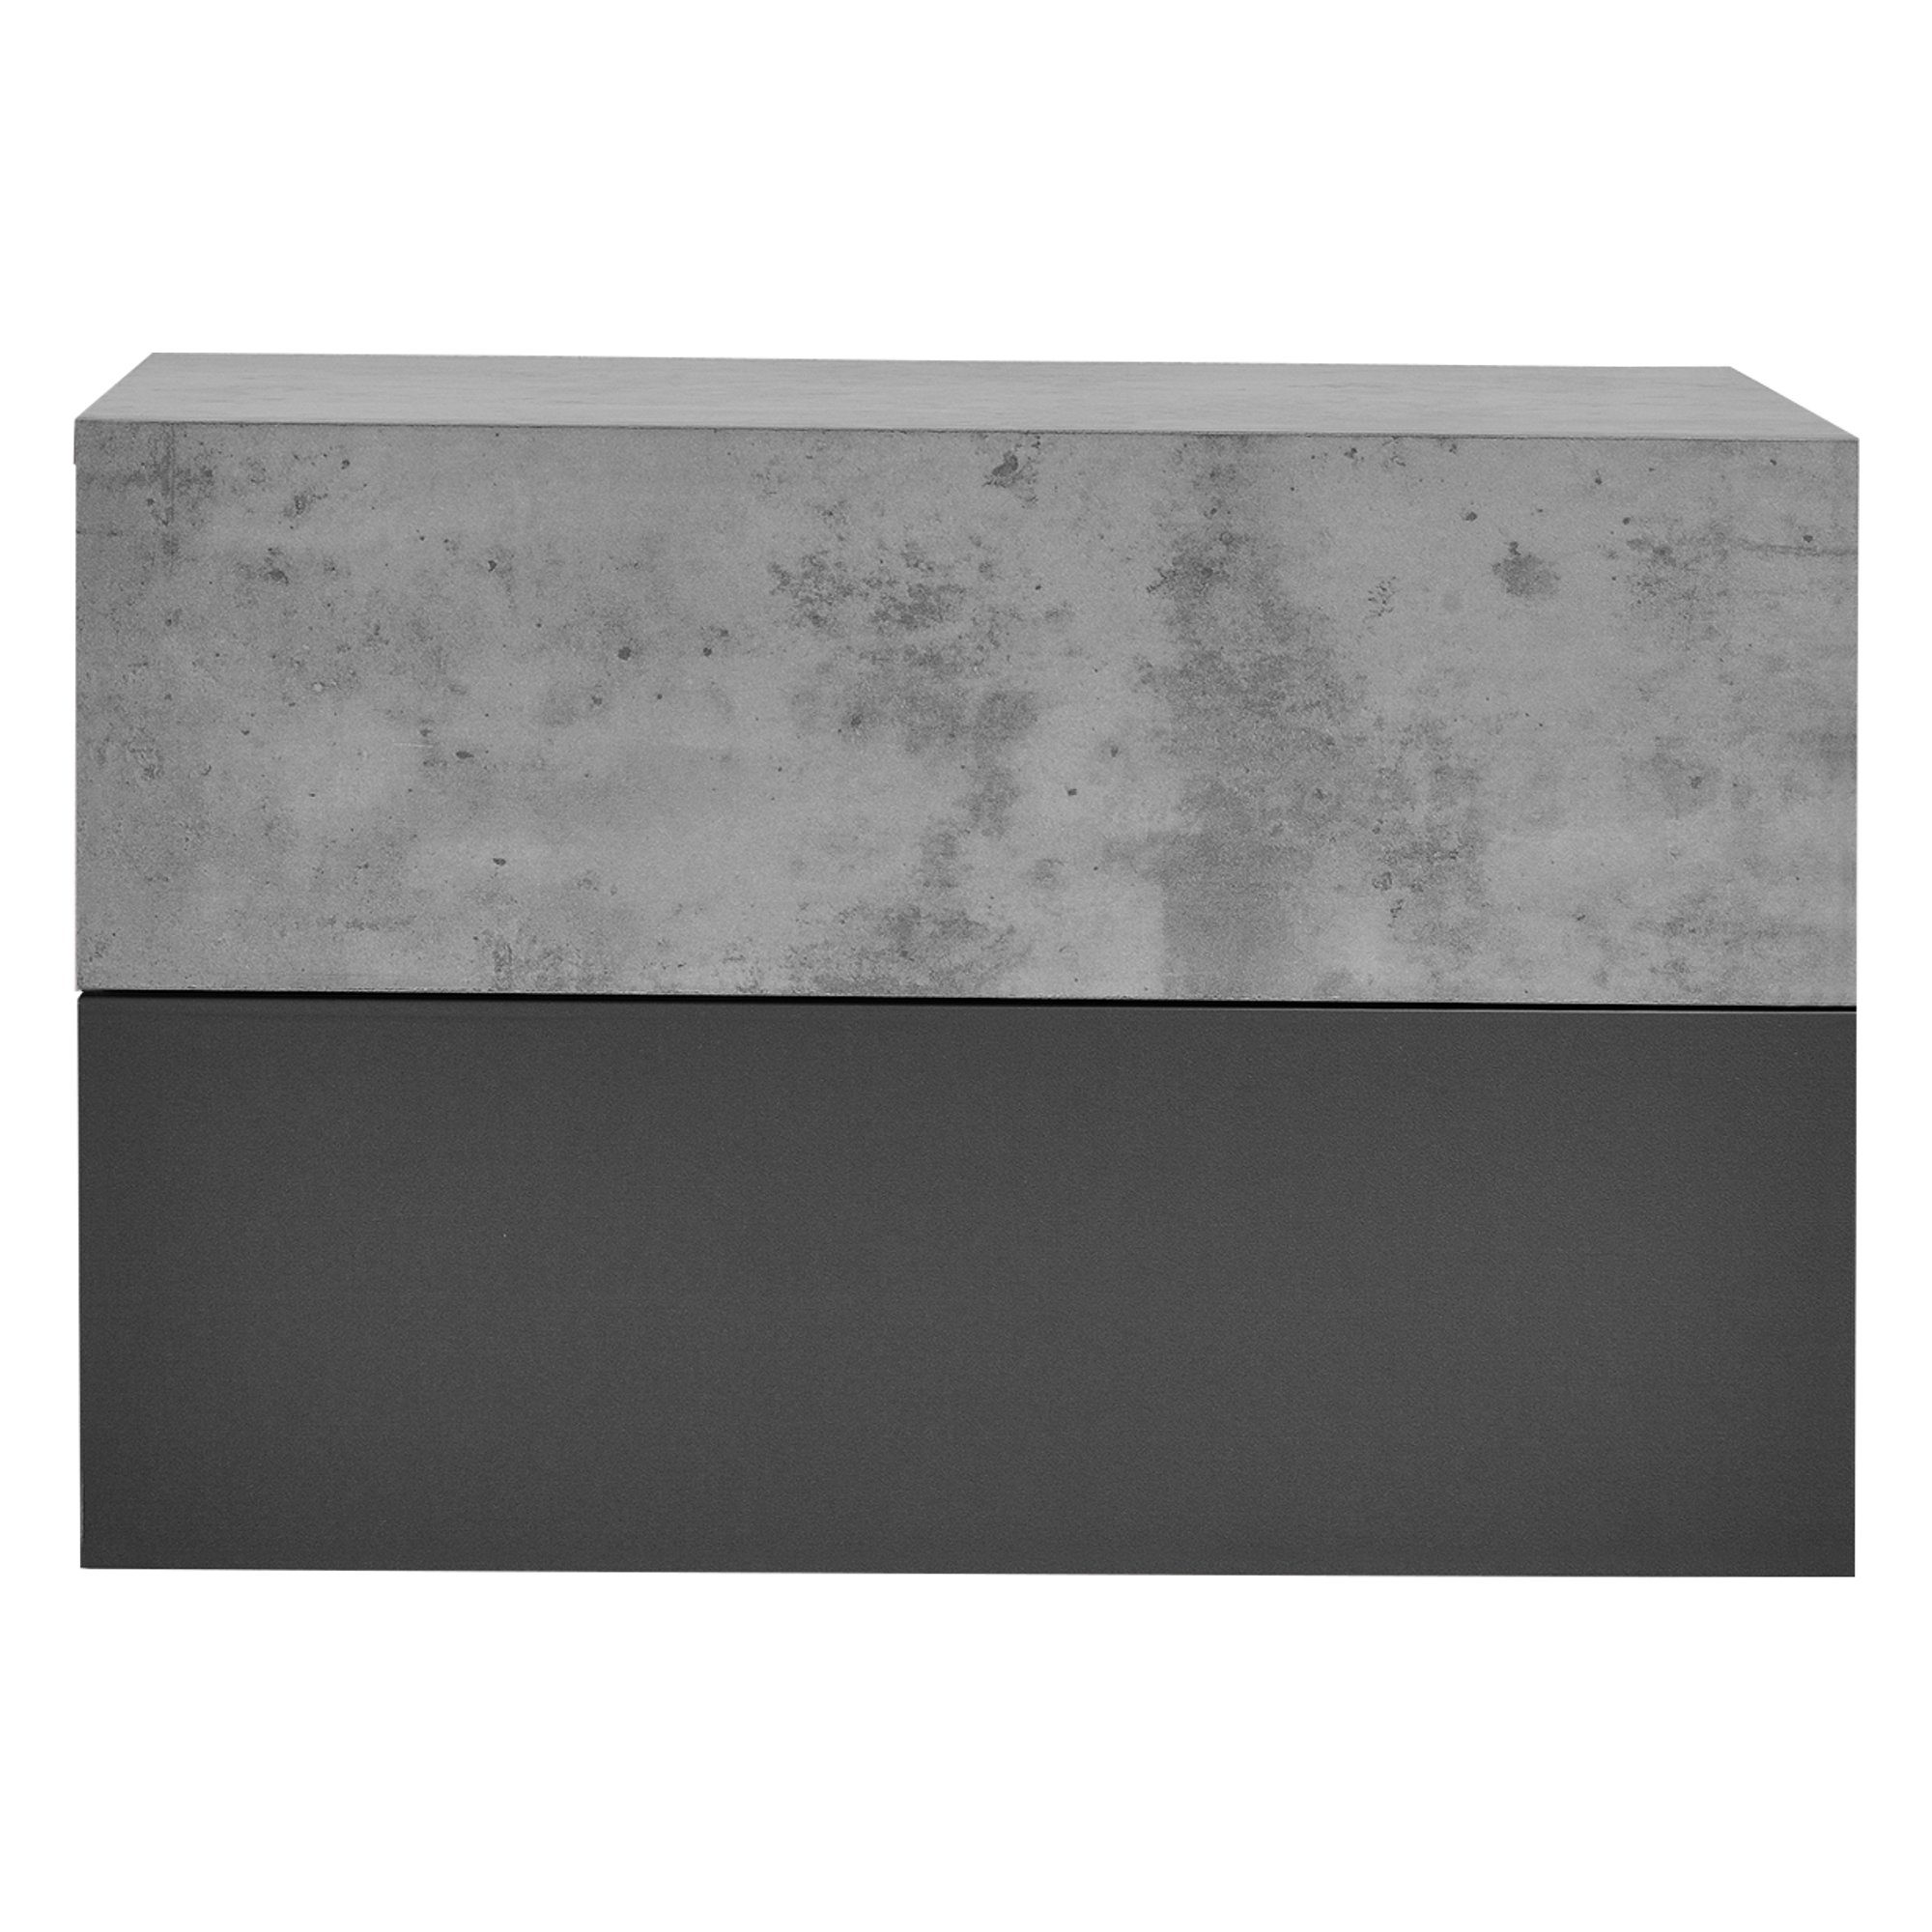 Beton/grau Schublade Nachtschrank »Oslo« 46x30x15cm mit en.casa Beton-Optik/Dunkelgrau